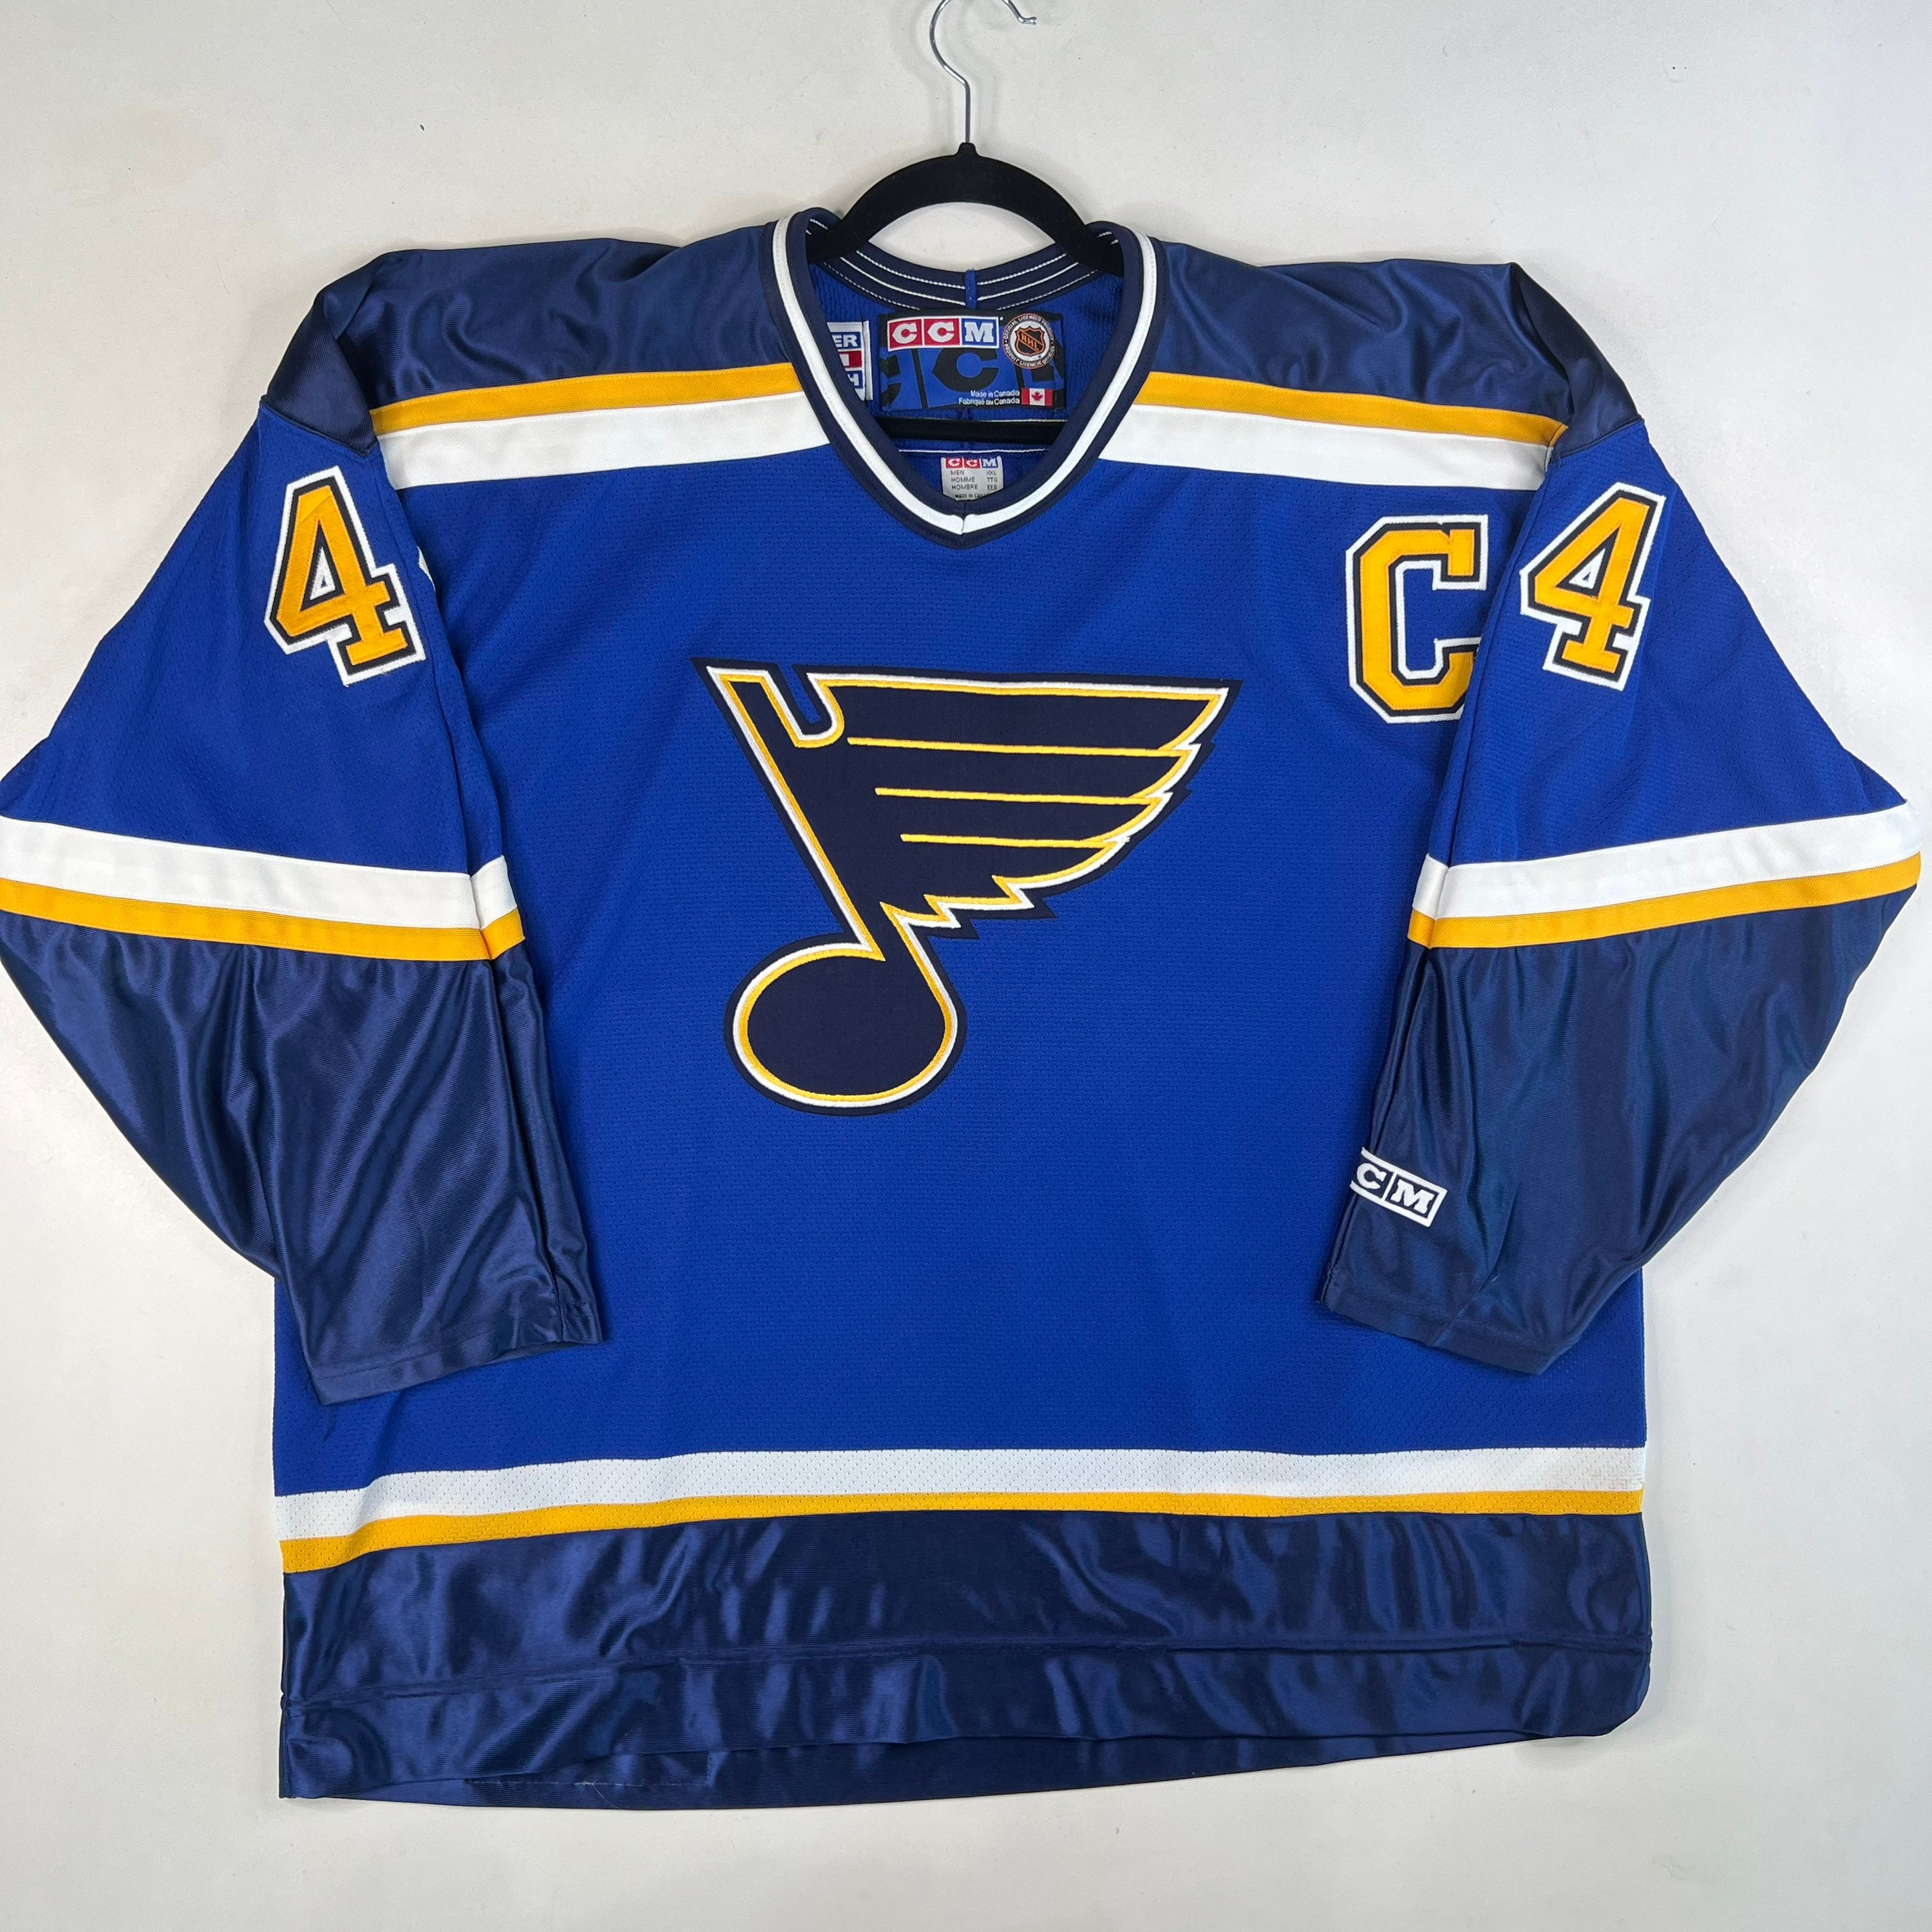 Fanatics Men's Wayne Gretzky Blue St. Louis Blues Authentic Stack Retired Player Nickname Number T-Shirt